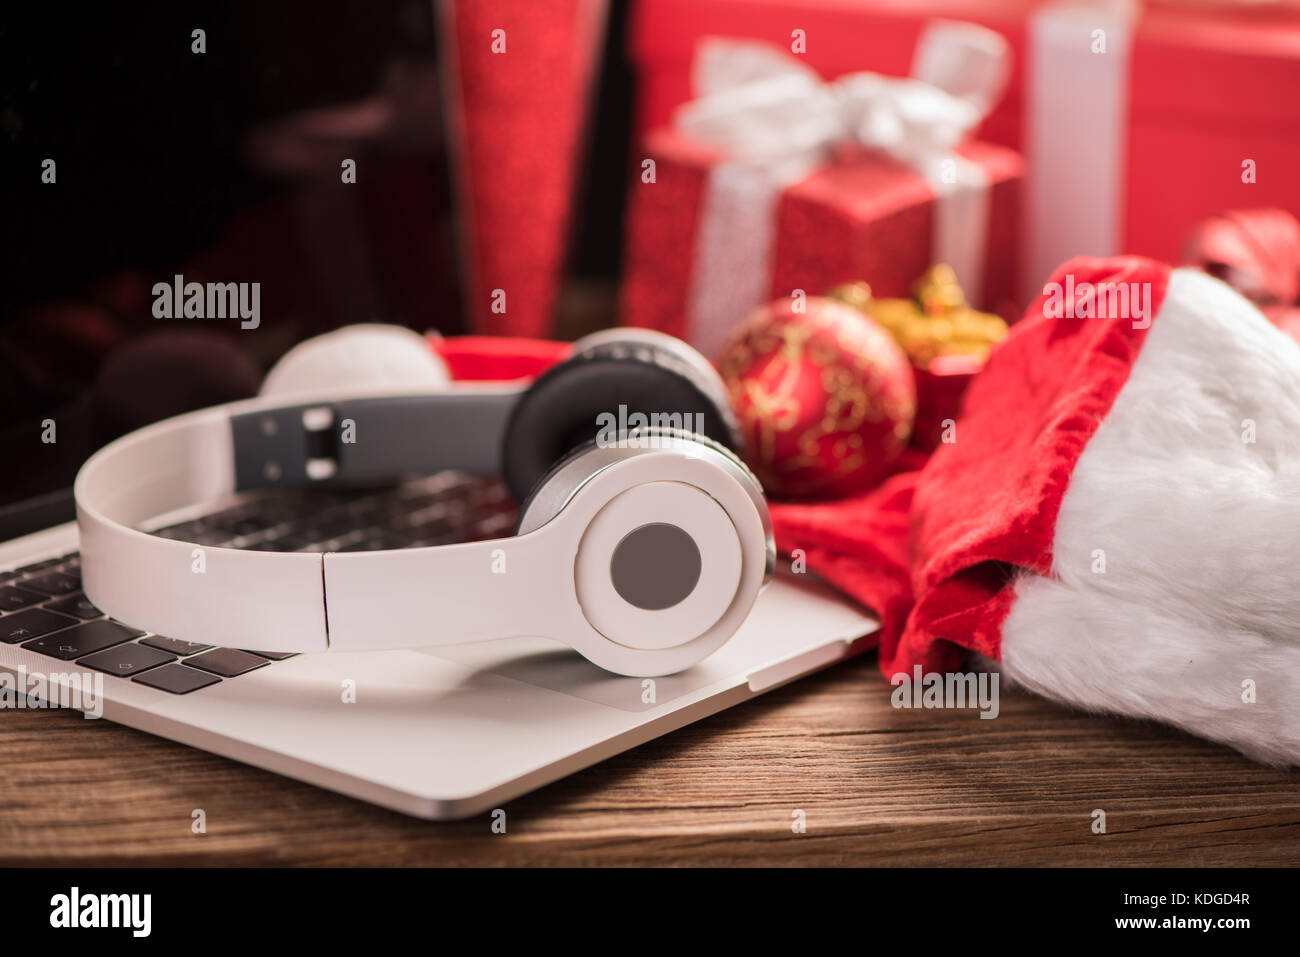 Best Christmas gifts idea Stock Photo Alamy